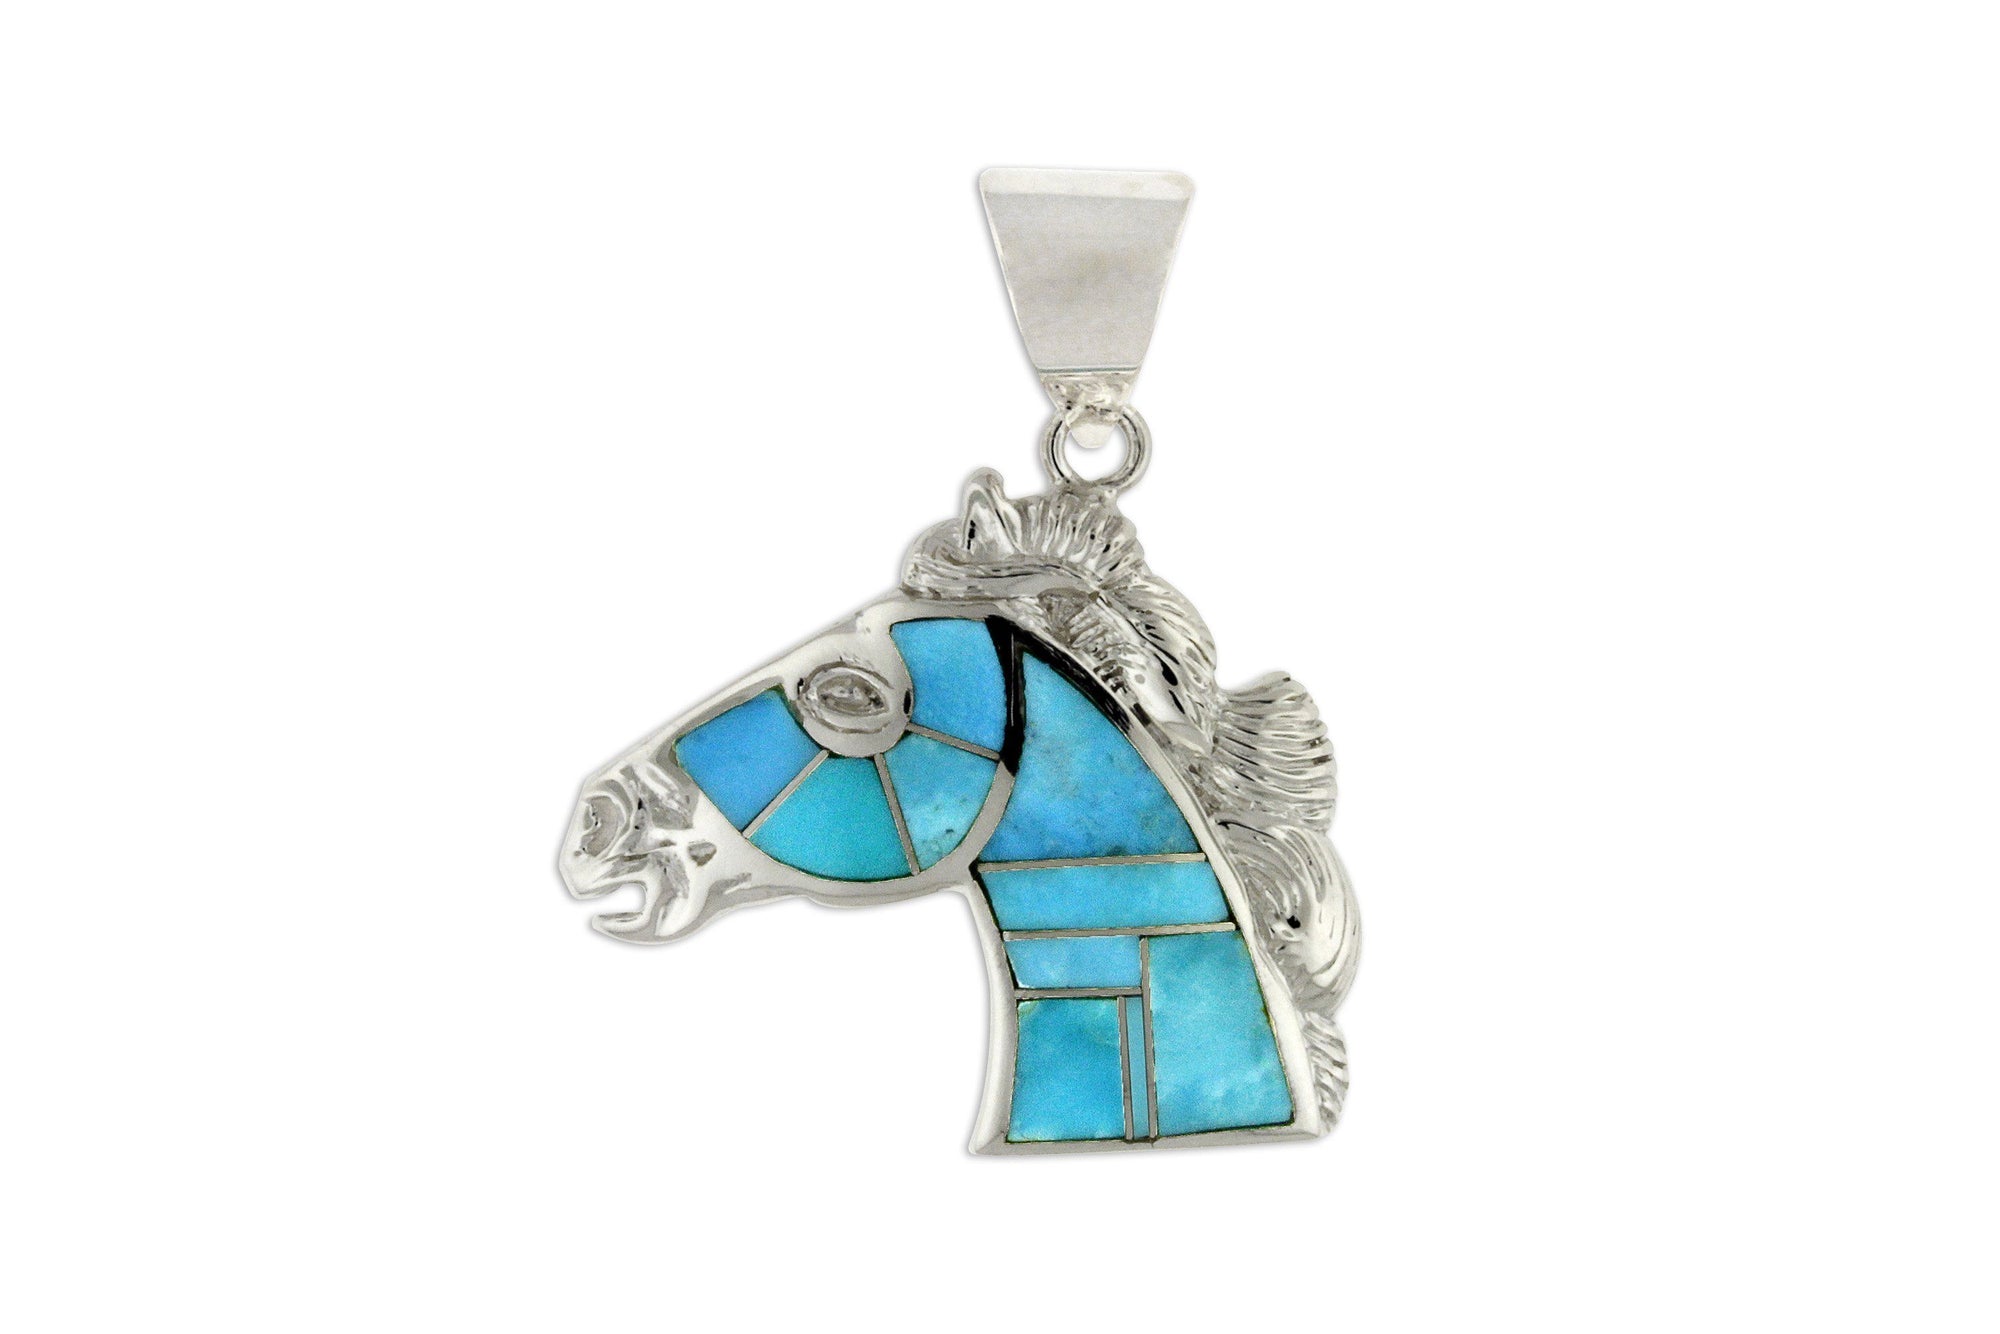 David Rosales Inlaid Horse Pendant - Turquoise Jewelry